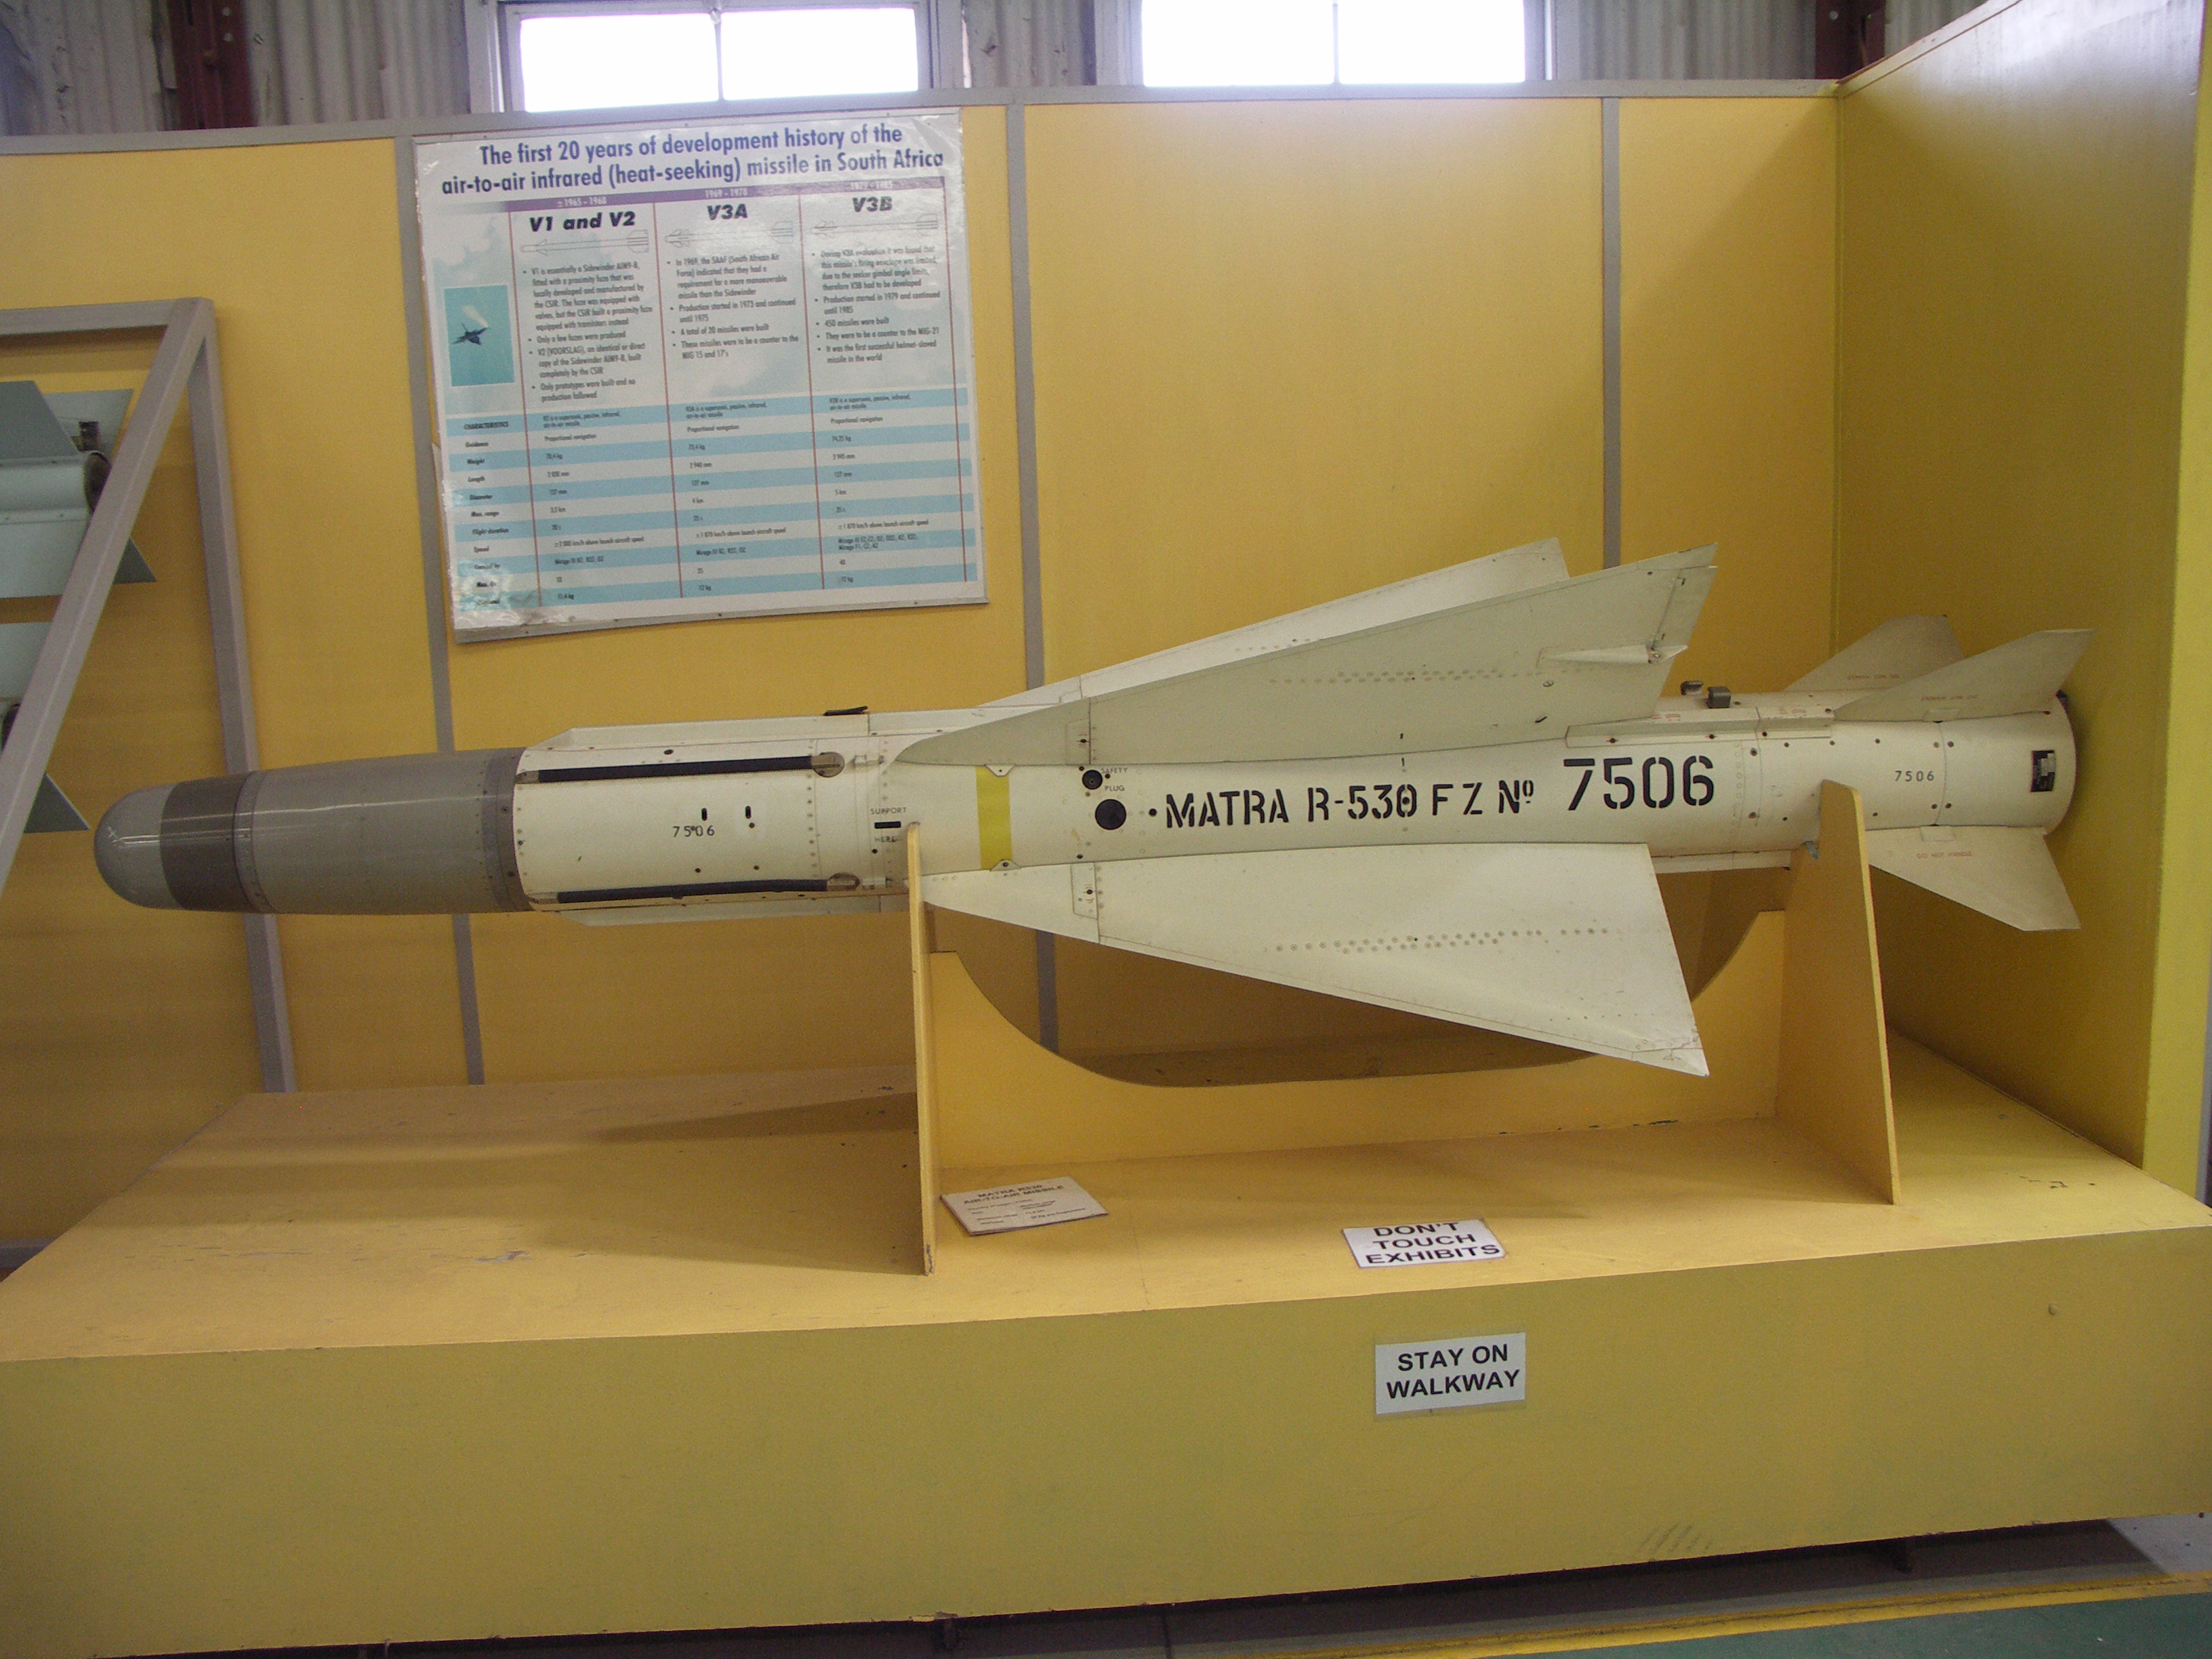 Matra_R530_missile-001.jpg